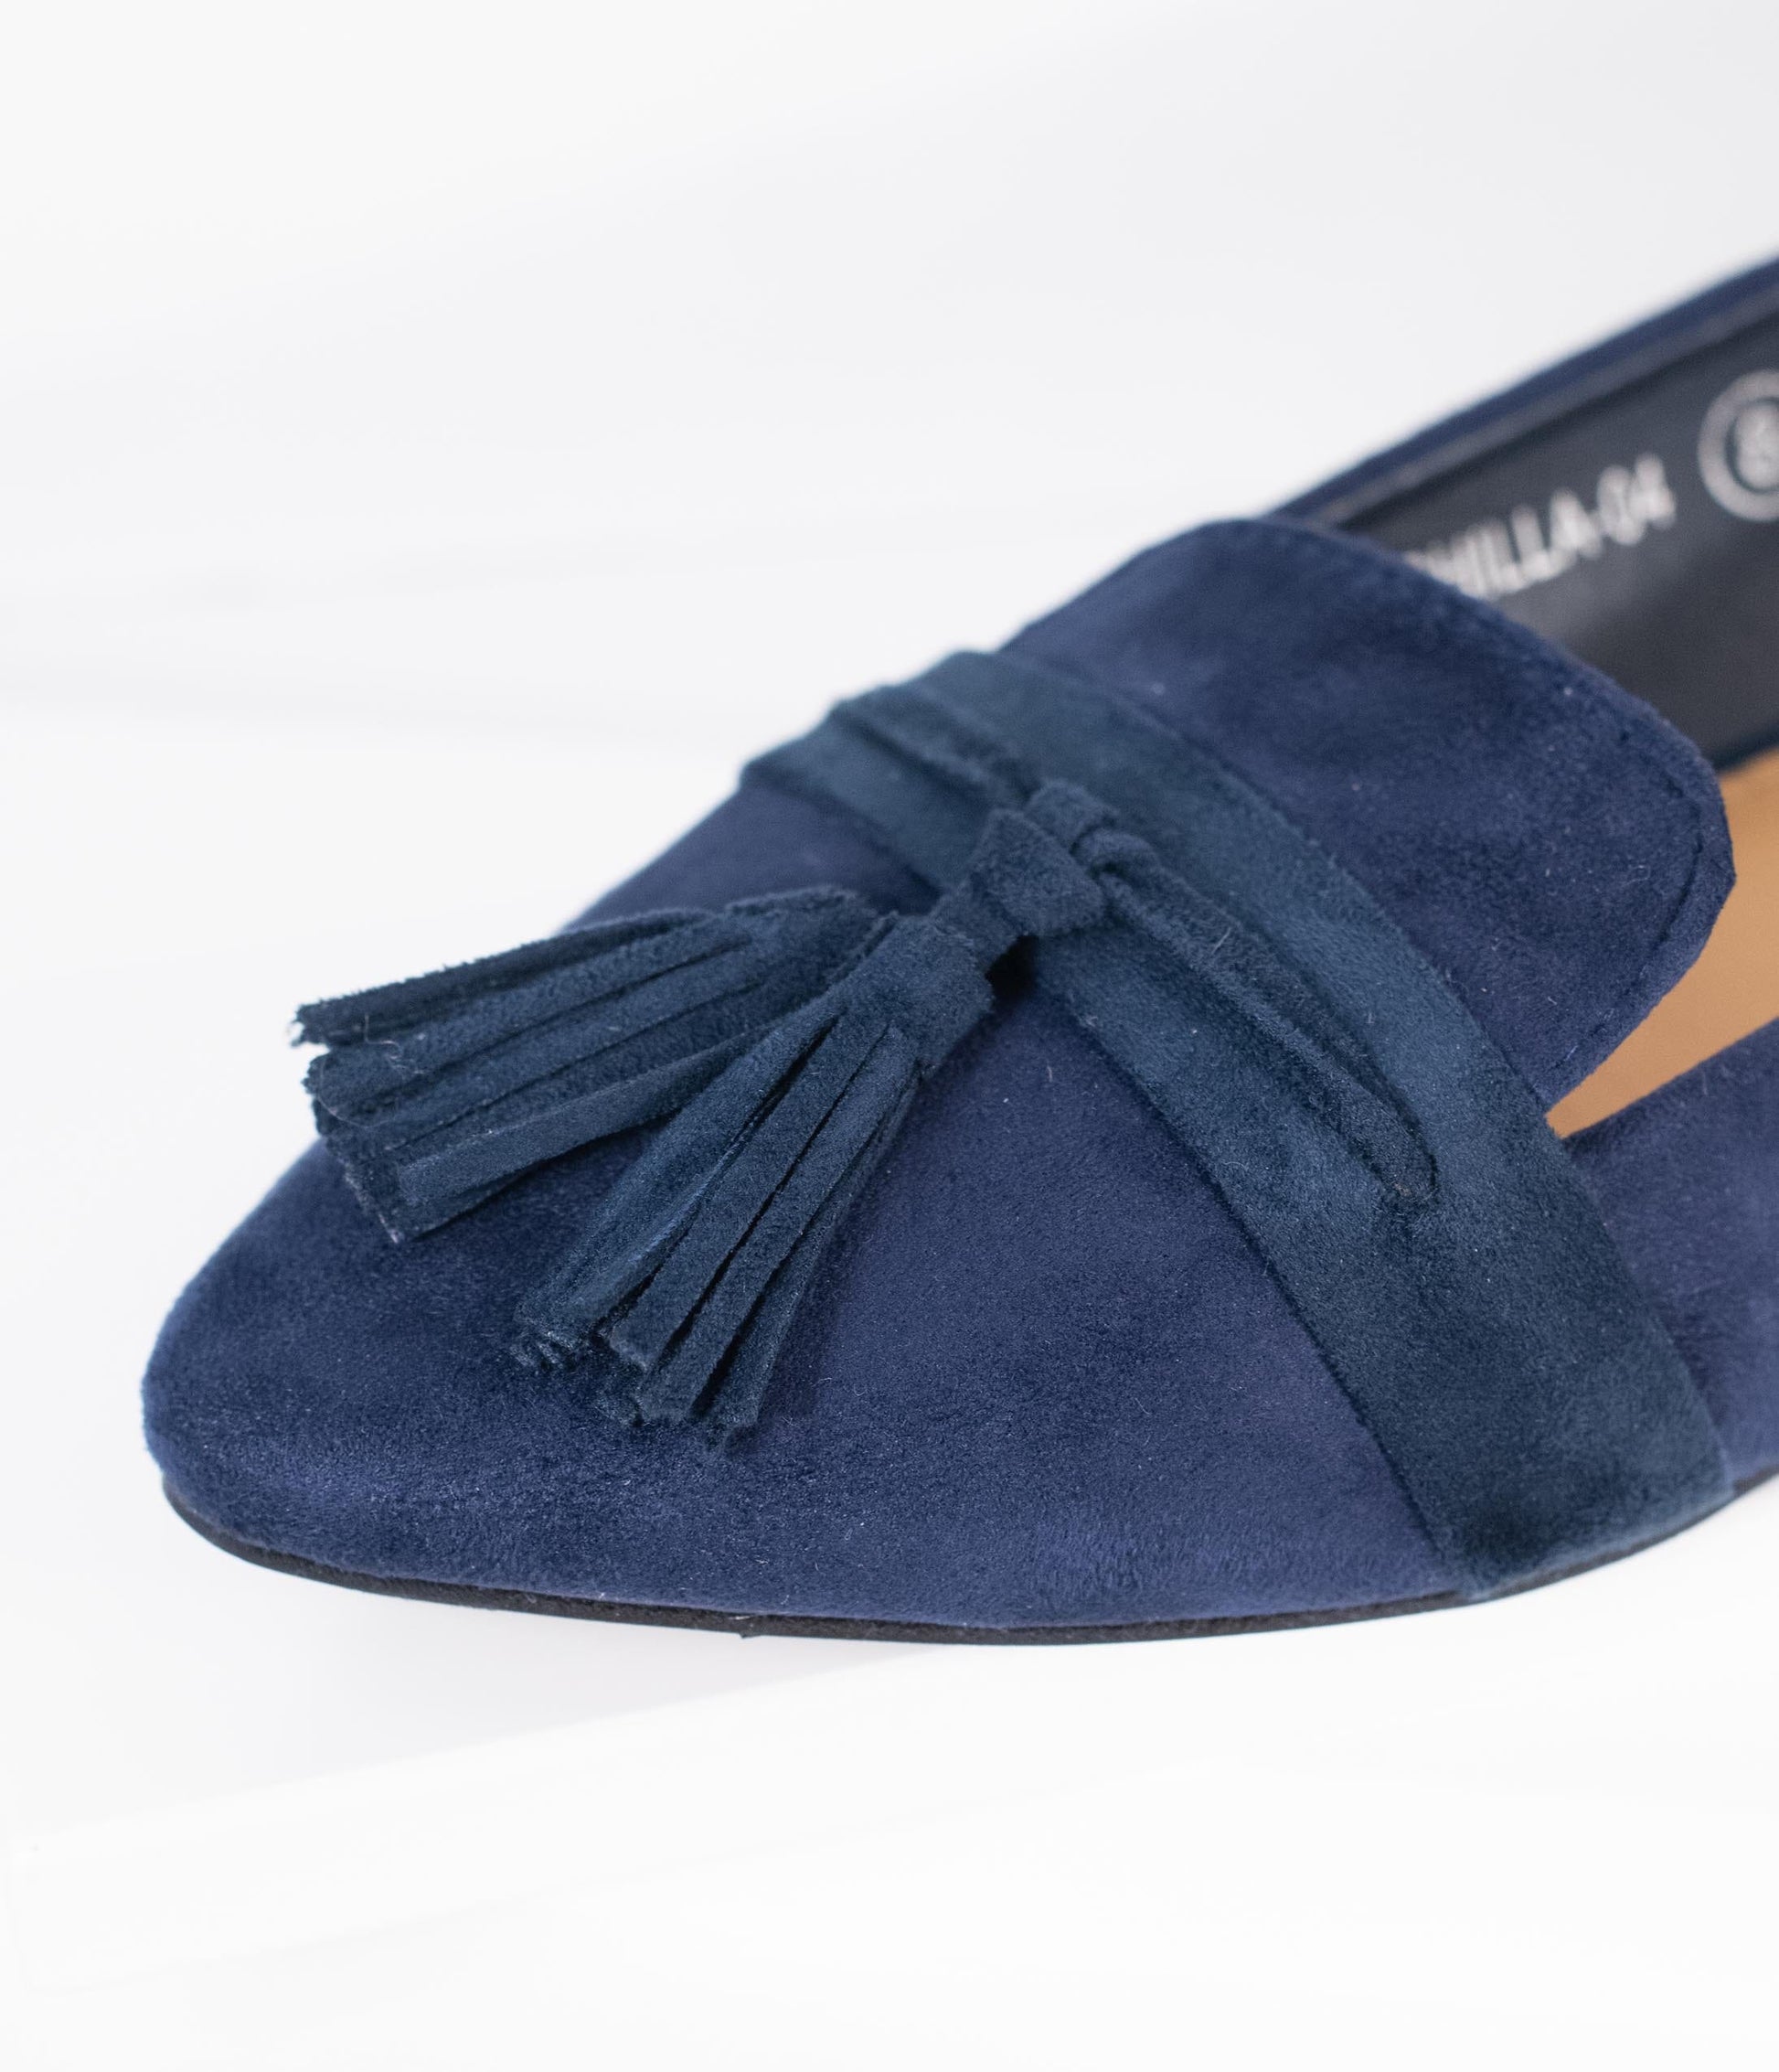 Dark Navy Blue Suede Tassel Loafer - Unique Vintage - Womens, SHOES, LOAFERS